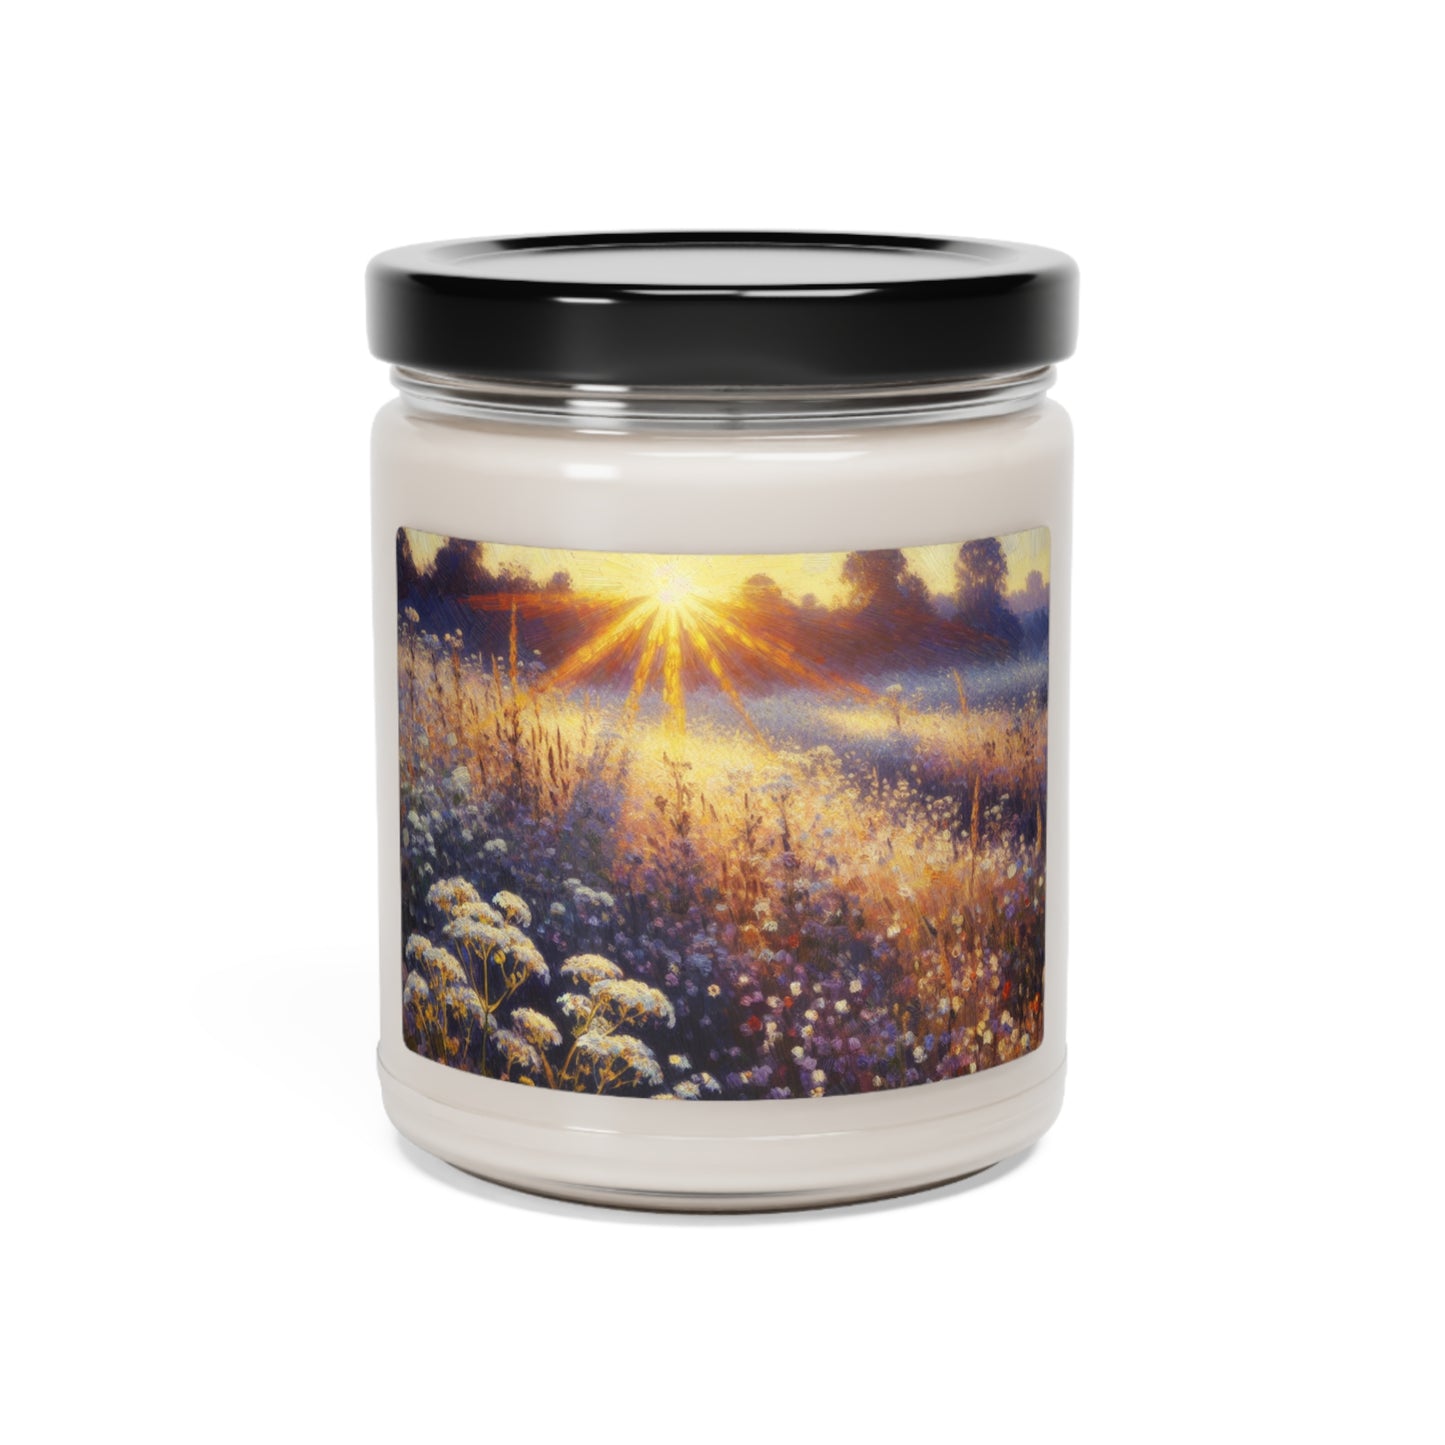 "Wildflower Sunrise" - La bougie de soja parfumée Alien 9oz Style impressionnisme